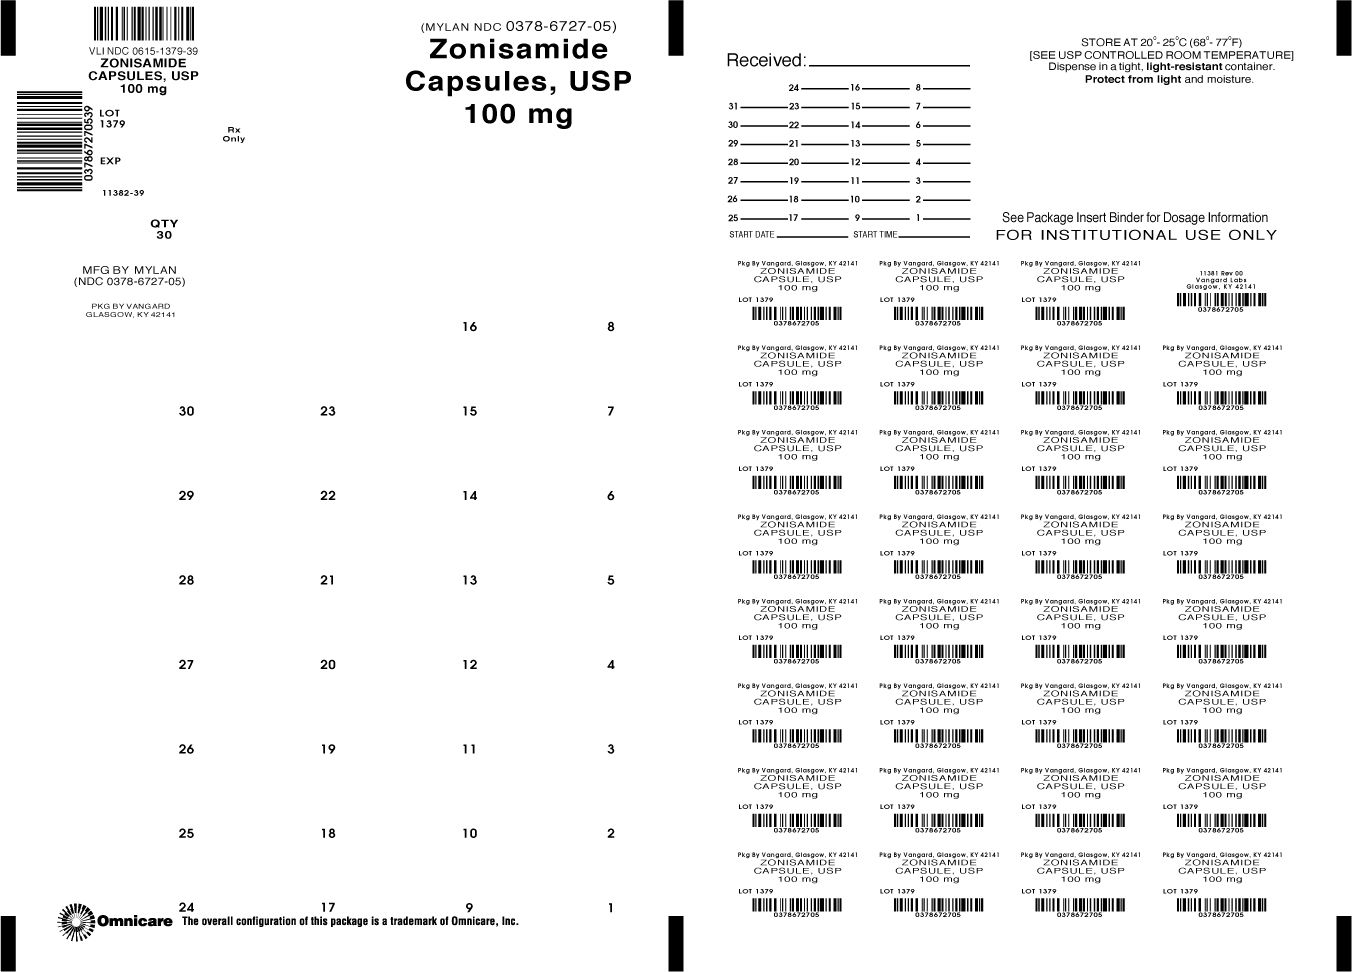 Principal Display Panel-Zonisamide Capsules, USP 100mg